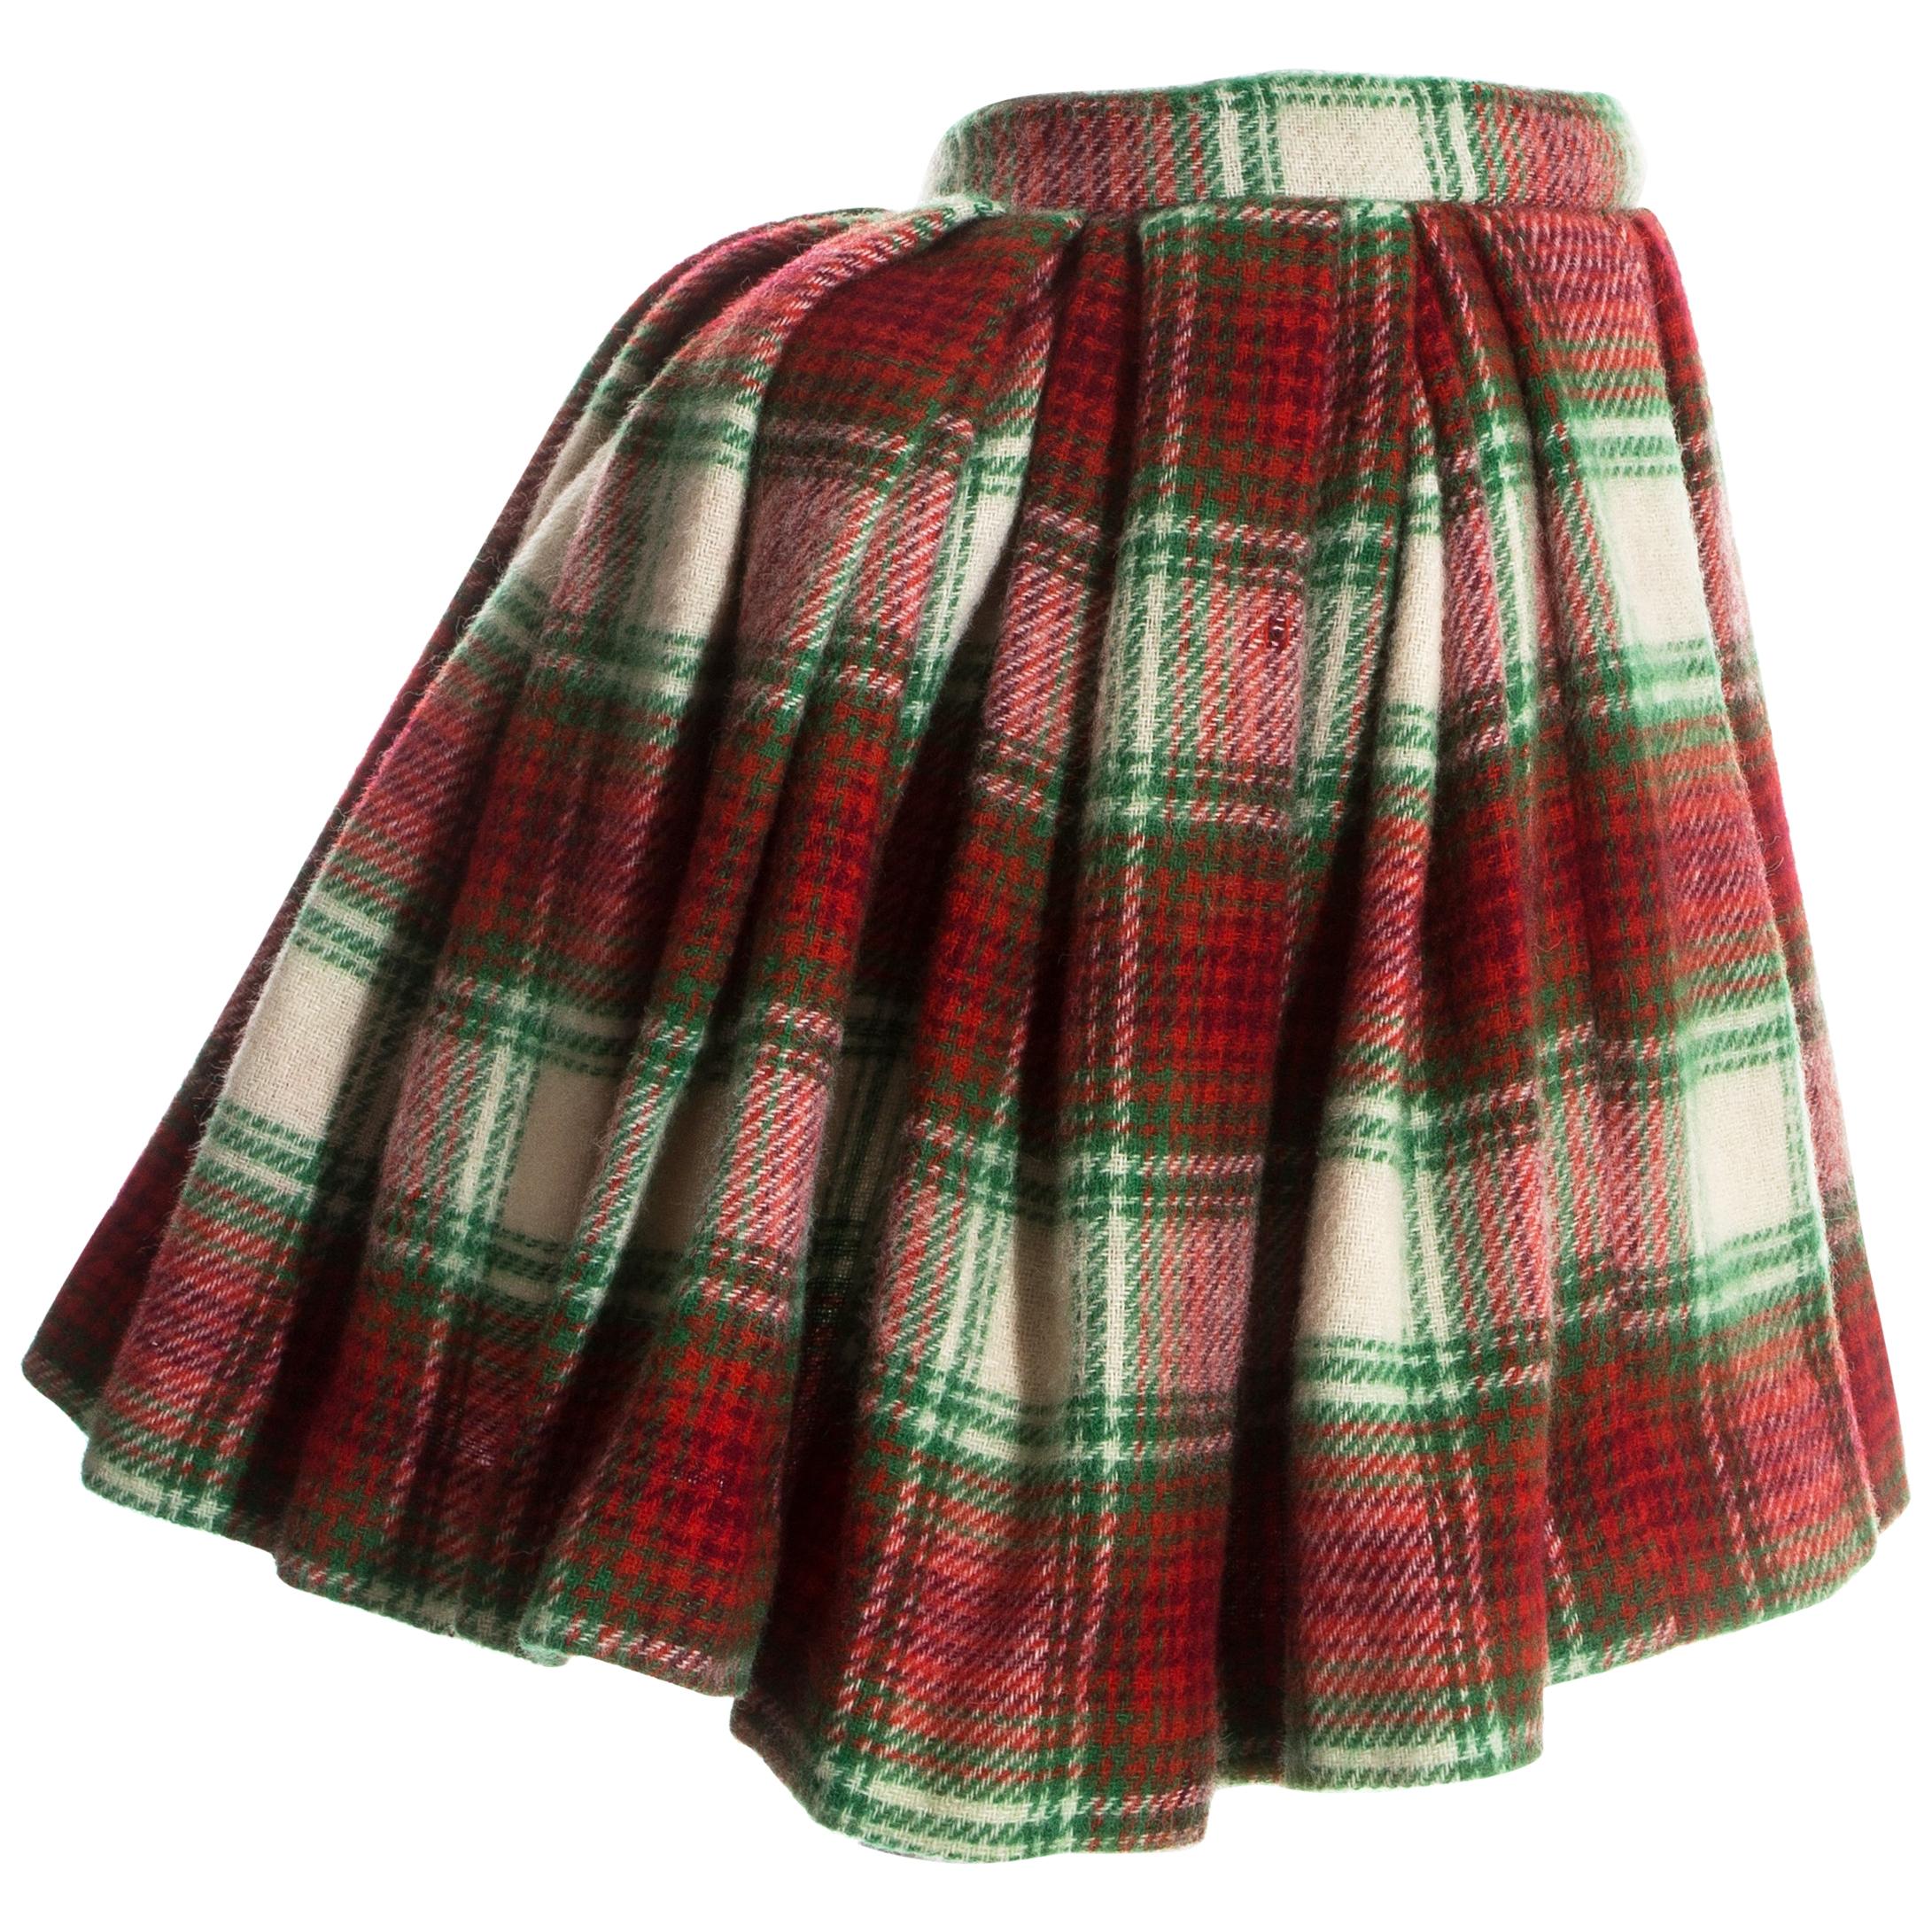 Vivienne Westwood red tartan wool pleated skirt with bustle, fw 1988